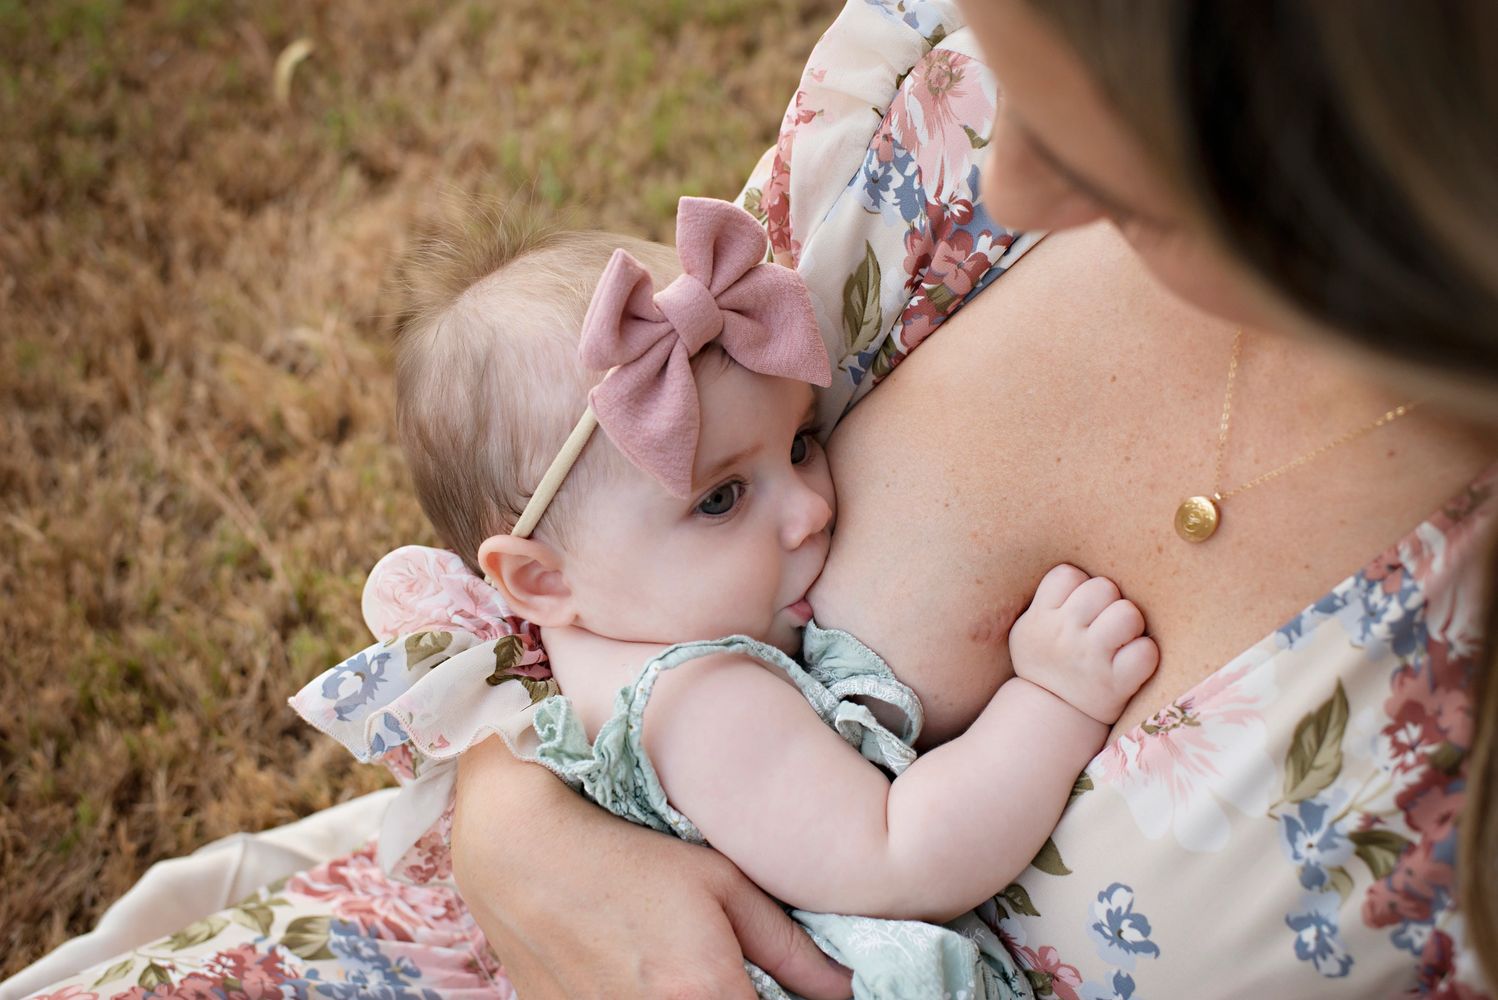 breastfeeding help
lactation consultant
ibclc
breastfeeding